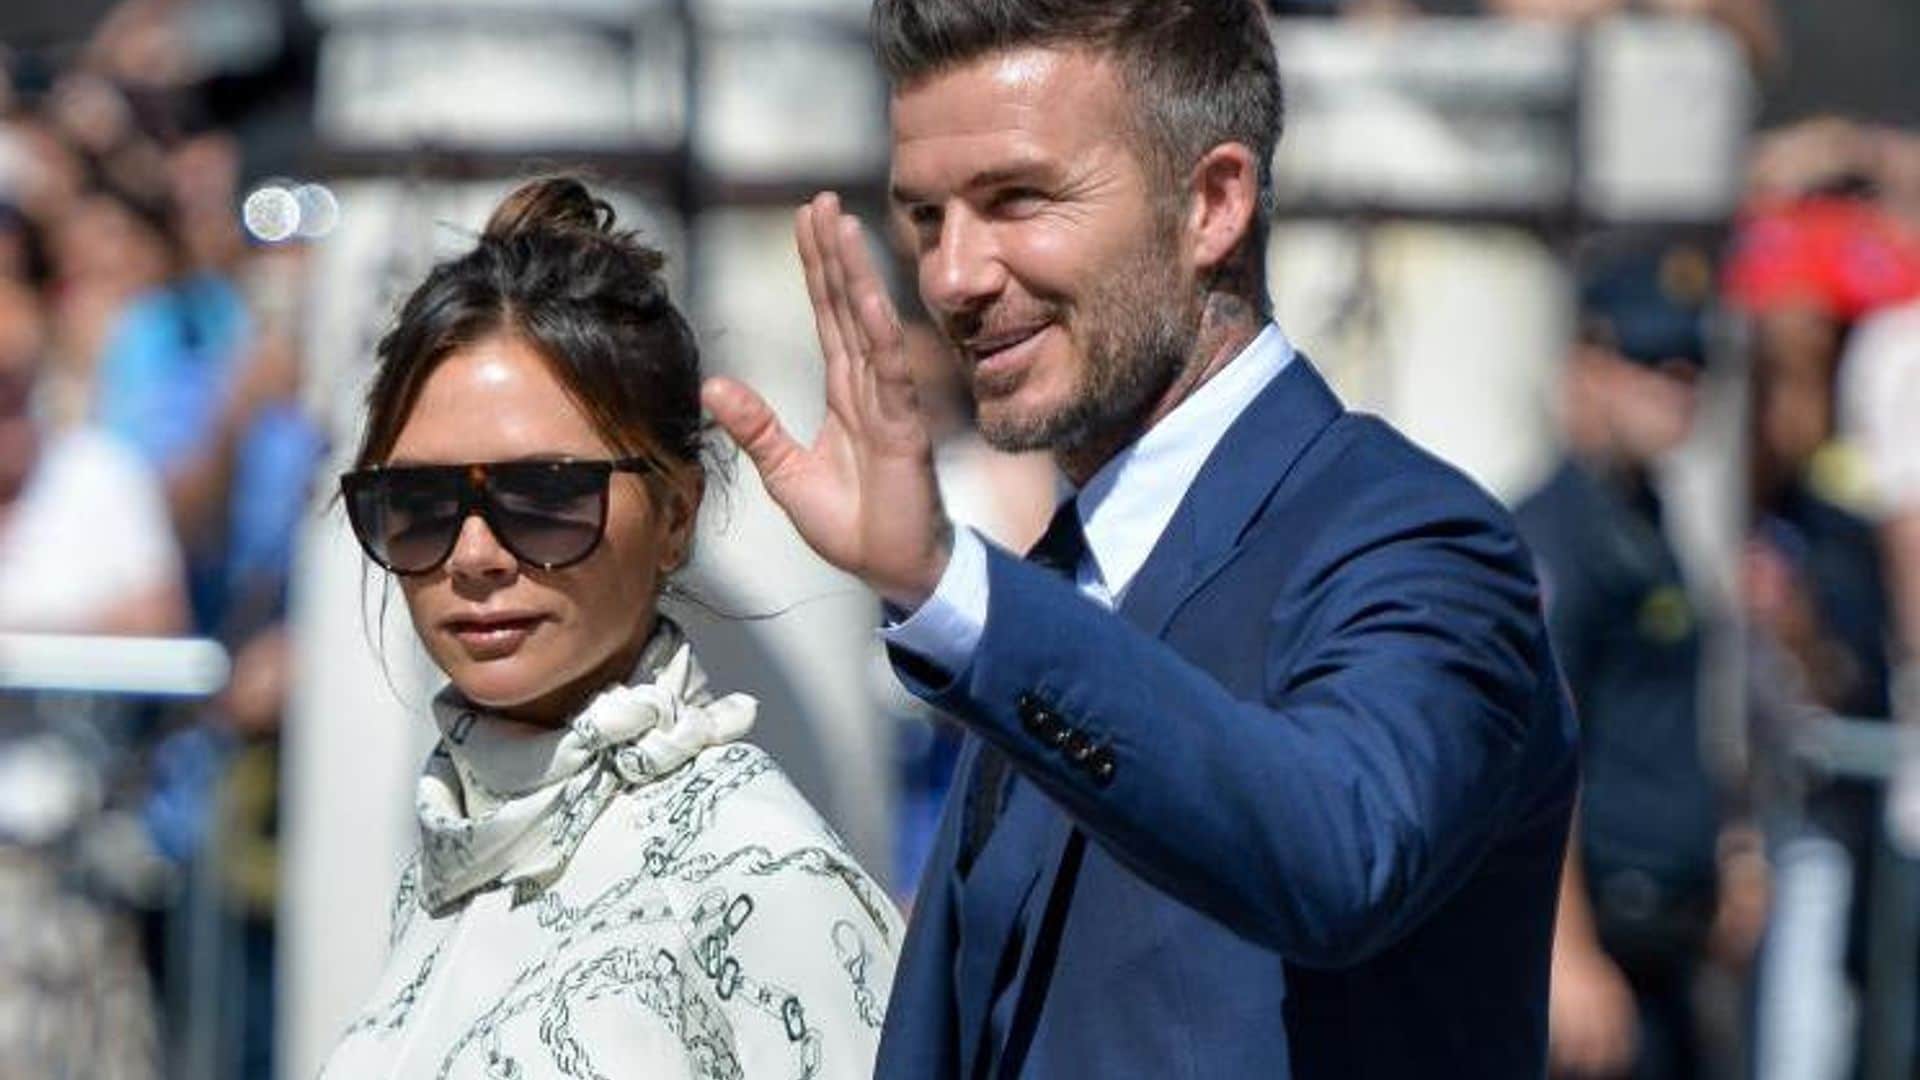 Victoria Beckham breaks protocol at Sergio Ramos' wedding in white Meghan Markle dress